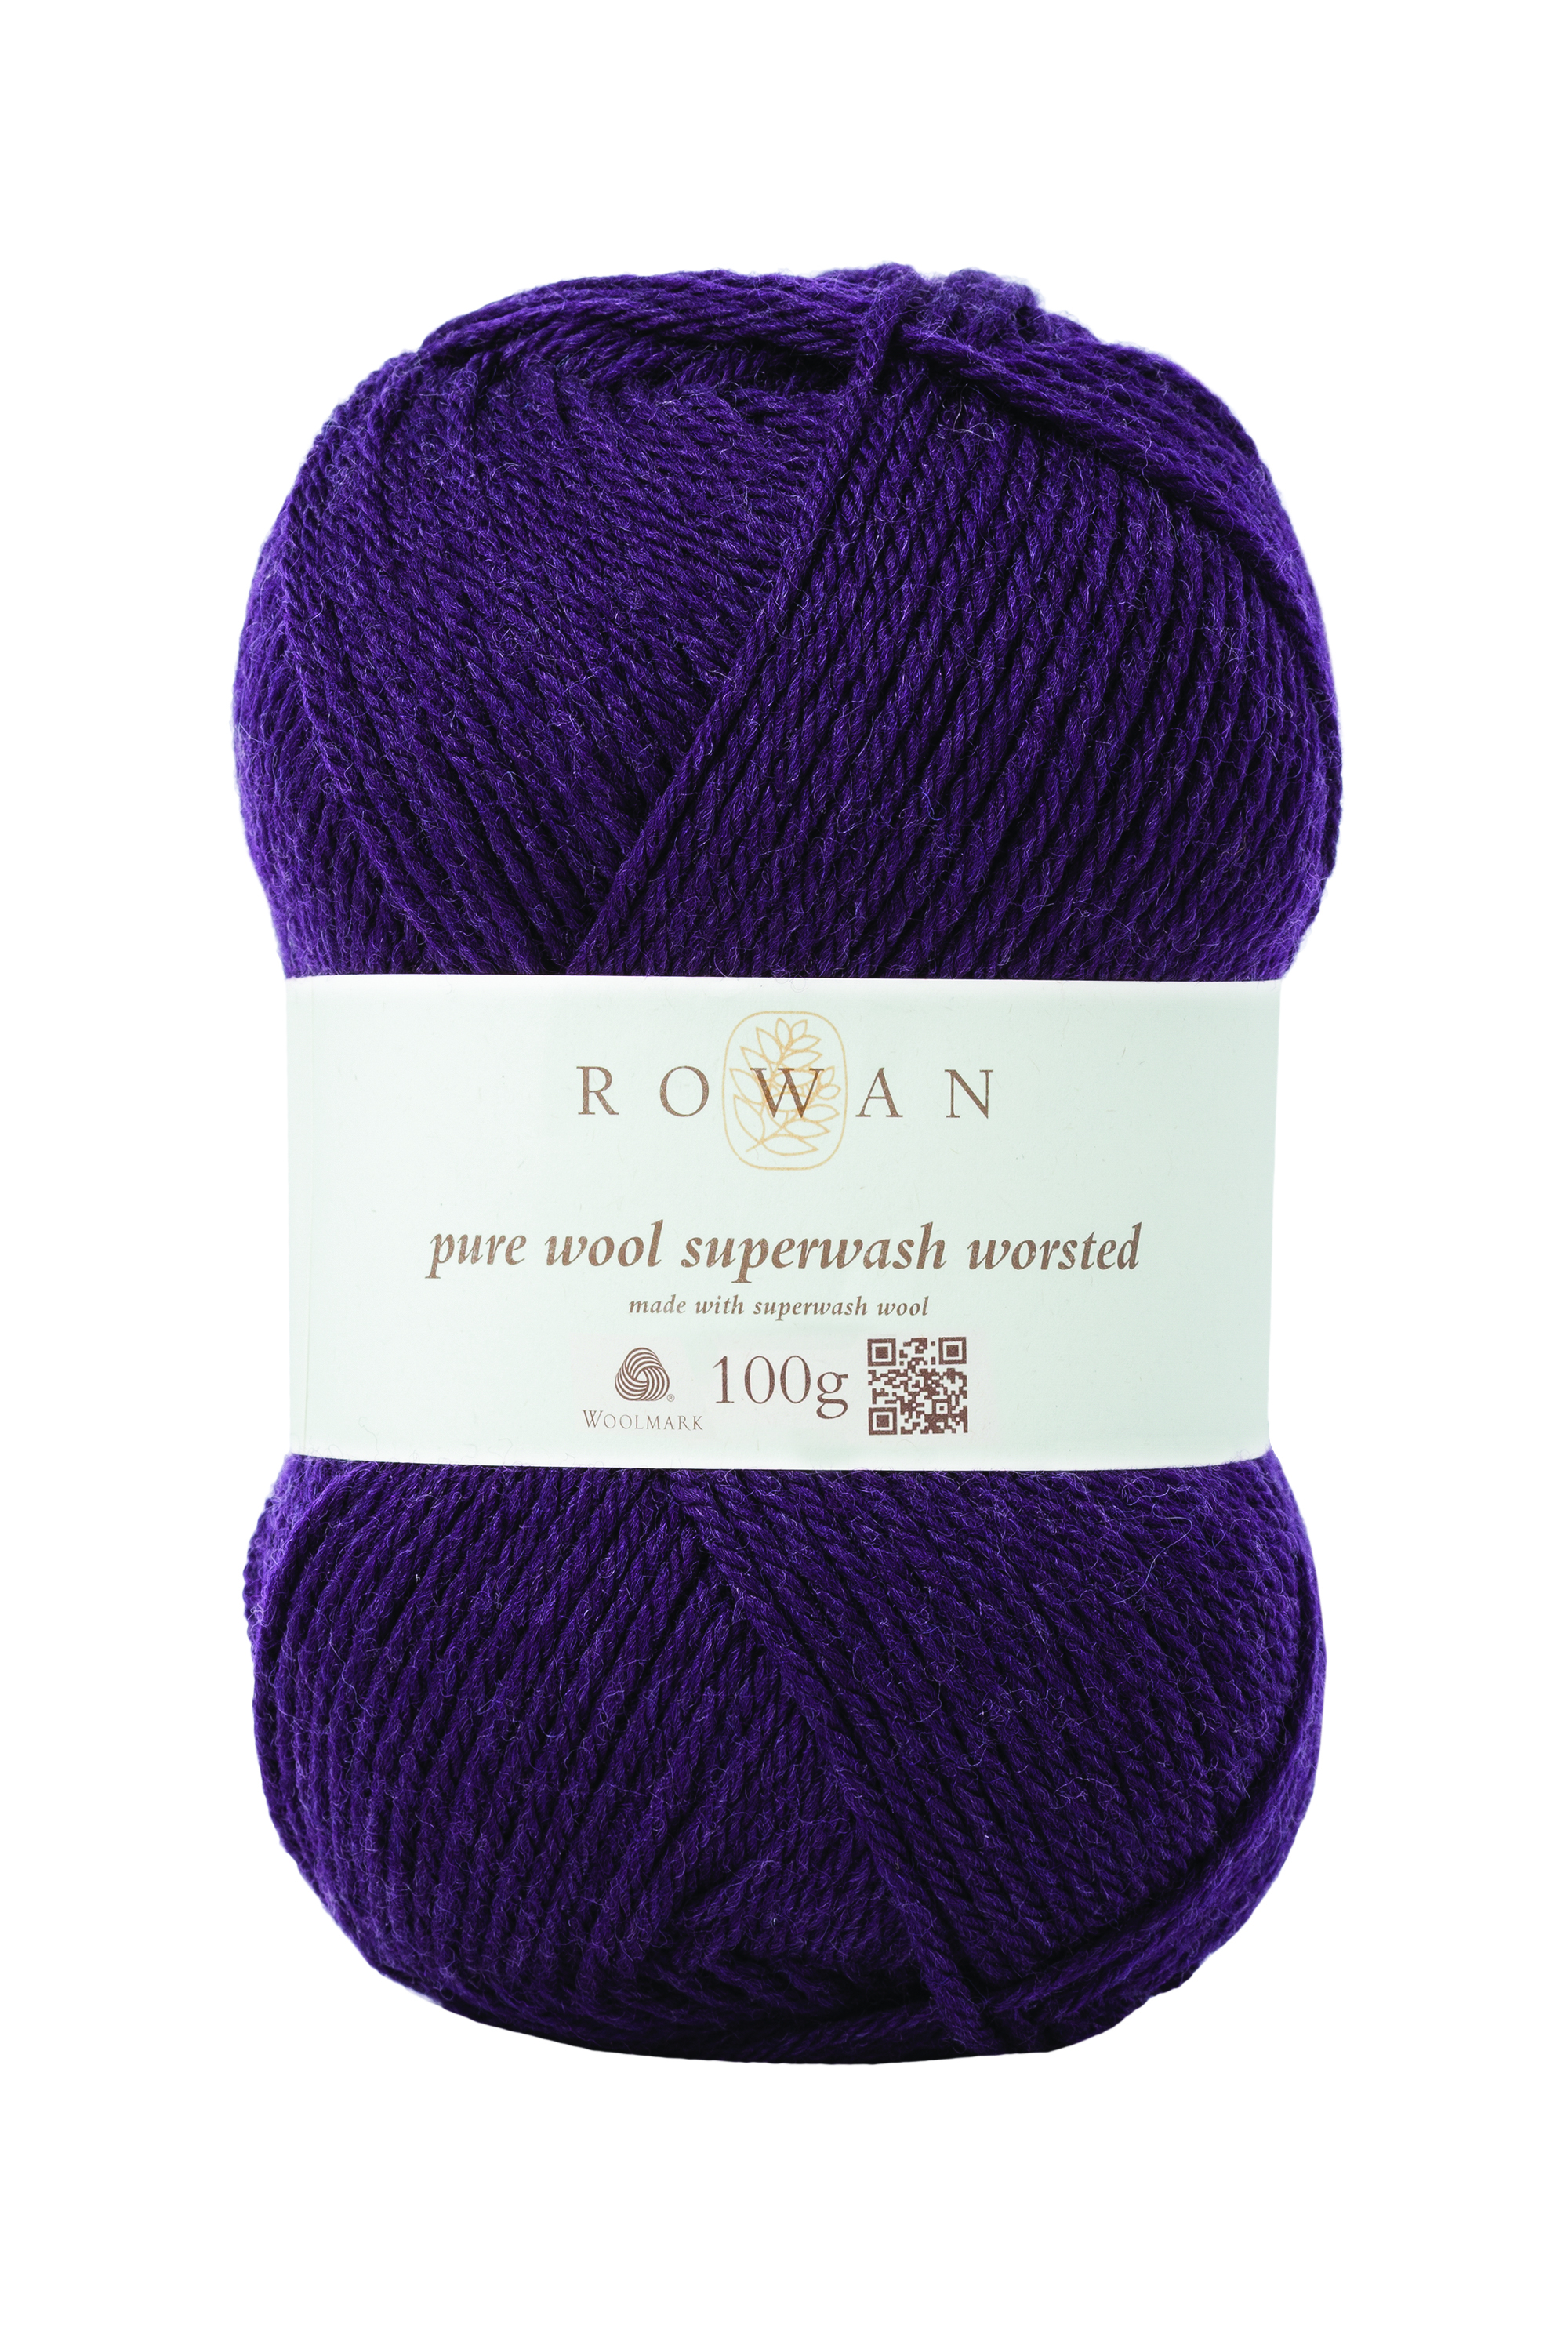 Knitrowan Com Free Knitting Patterns The Rowan Knit Along Is Here Karelia House